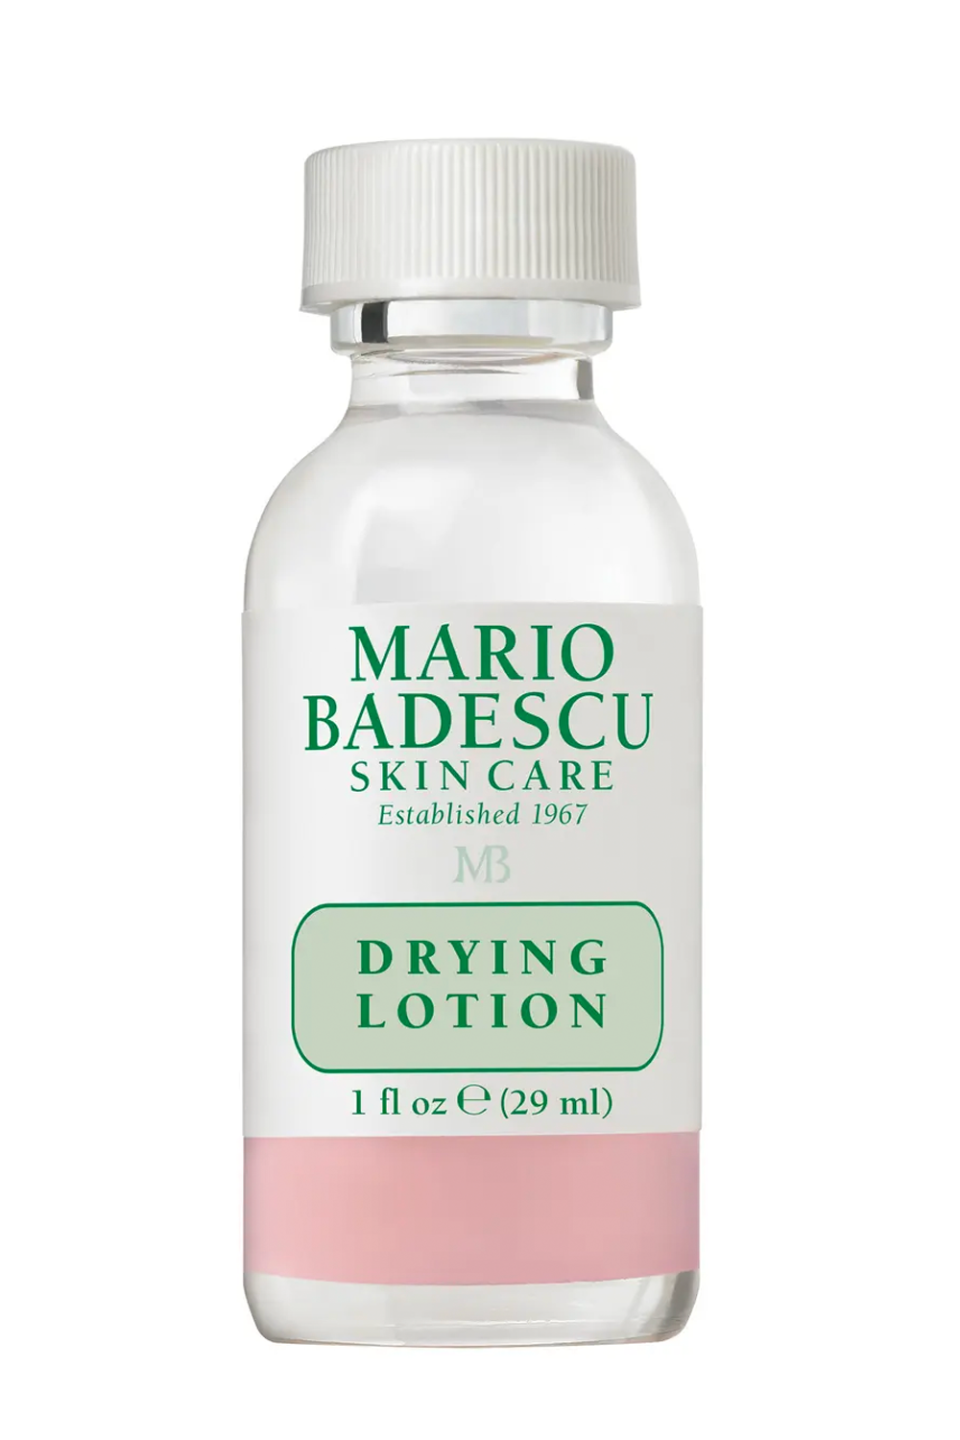 5) Mario Badescu Drying Lotion